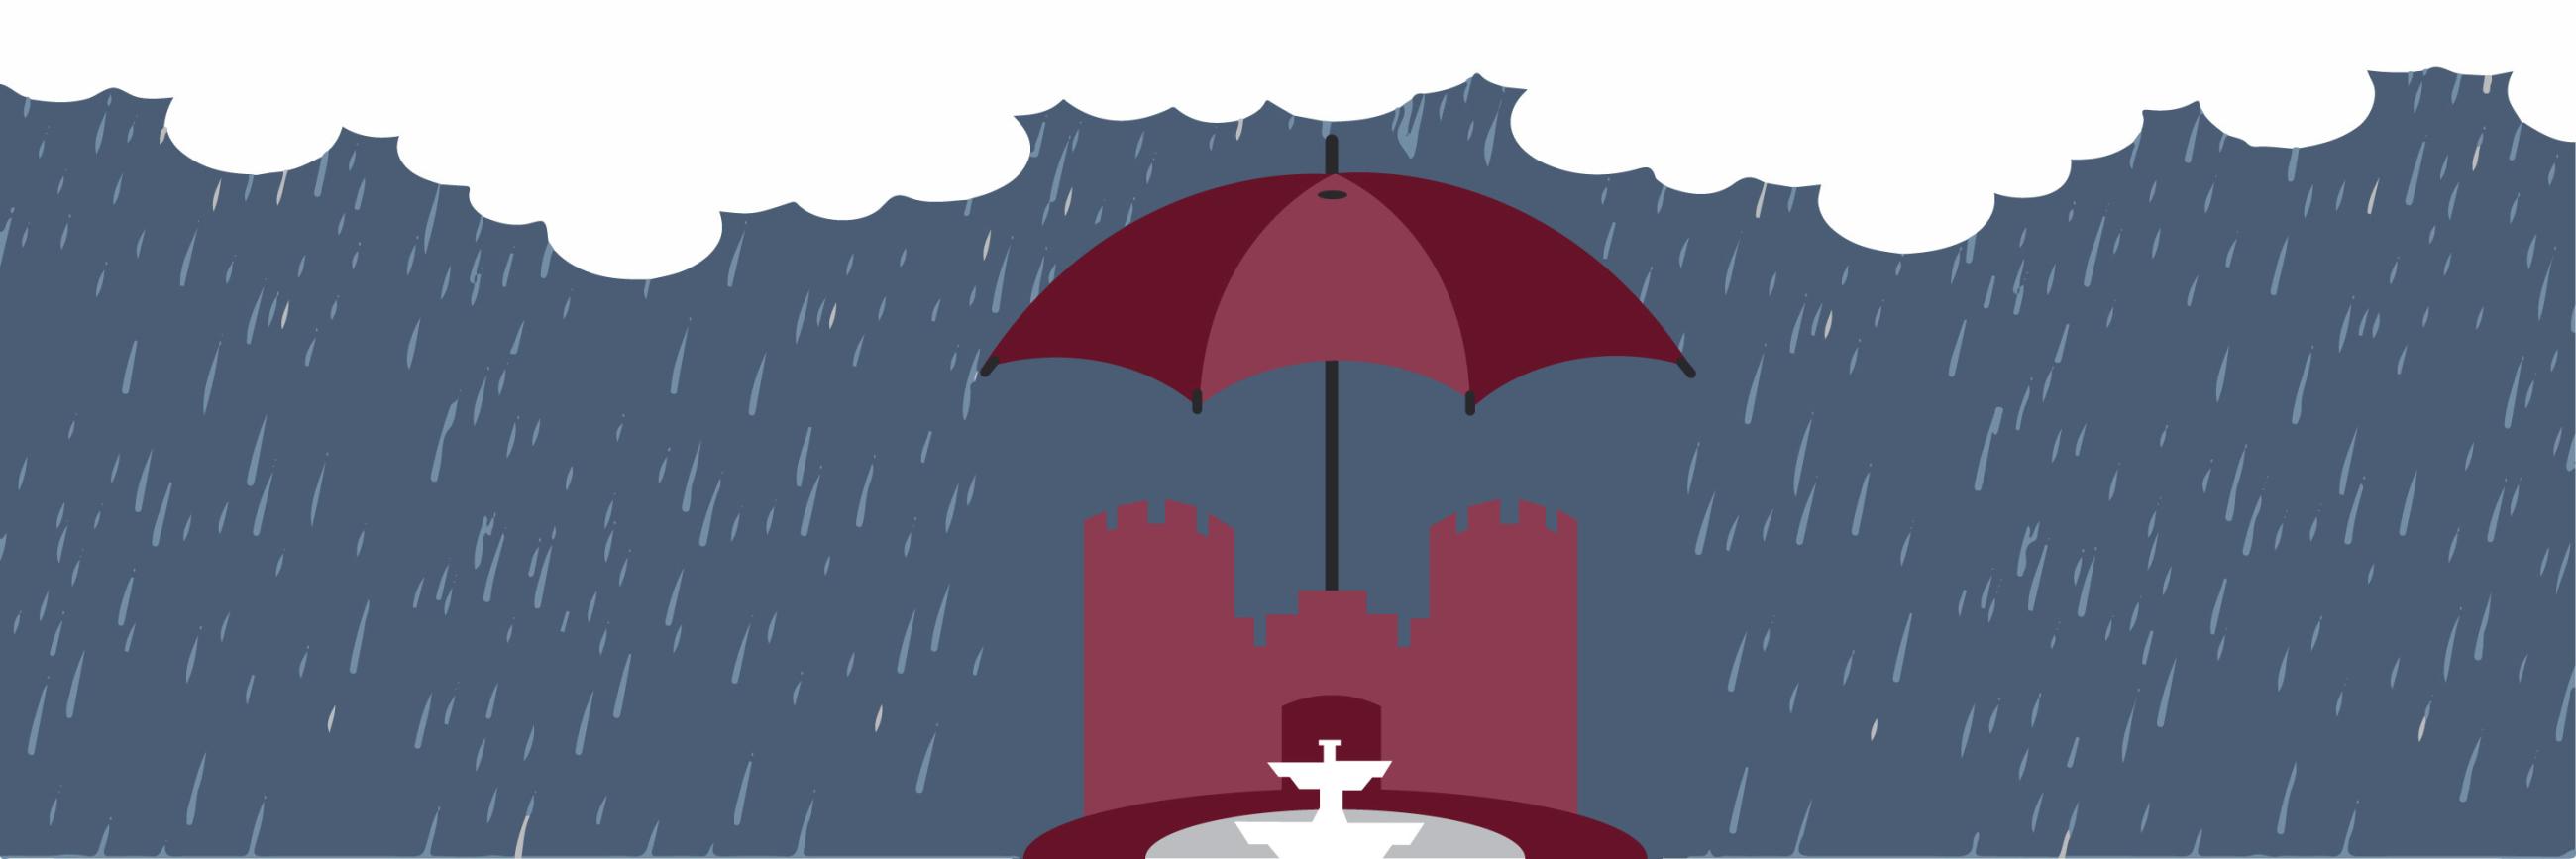 Graphic of Rain and Umbrella over Westcott